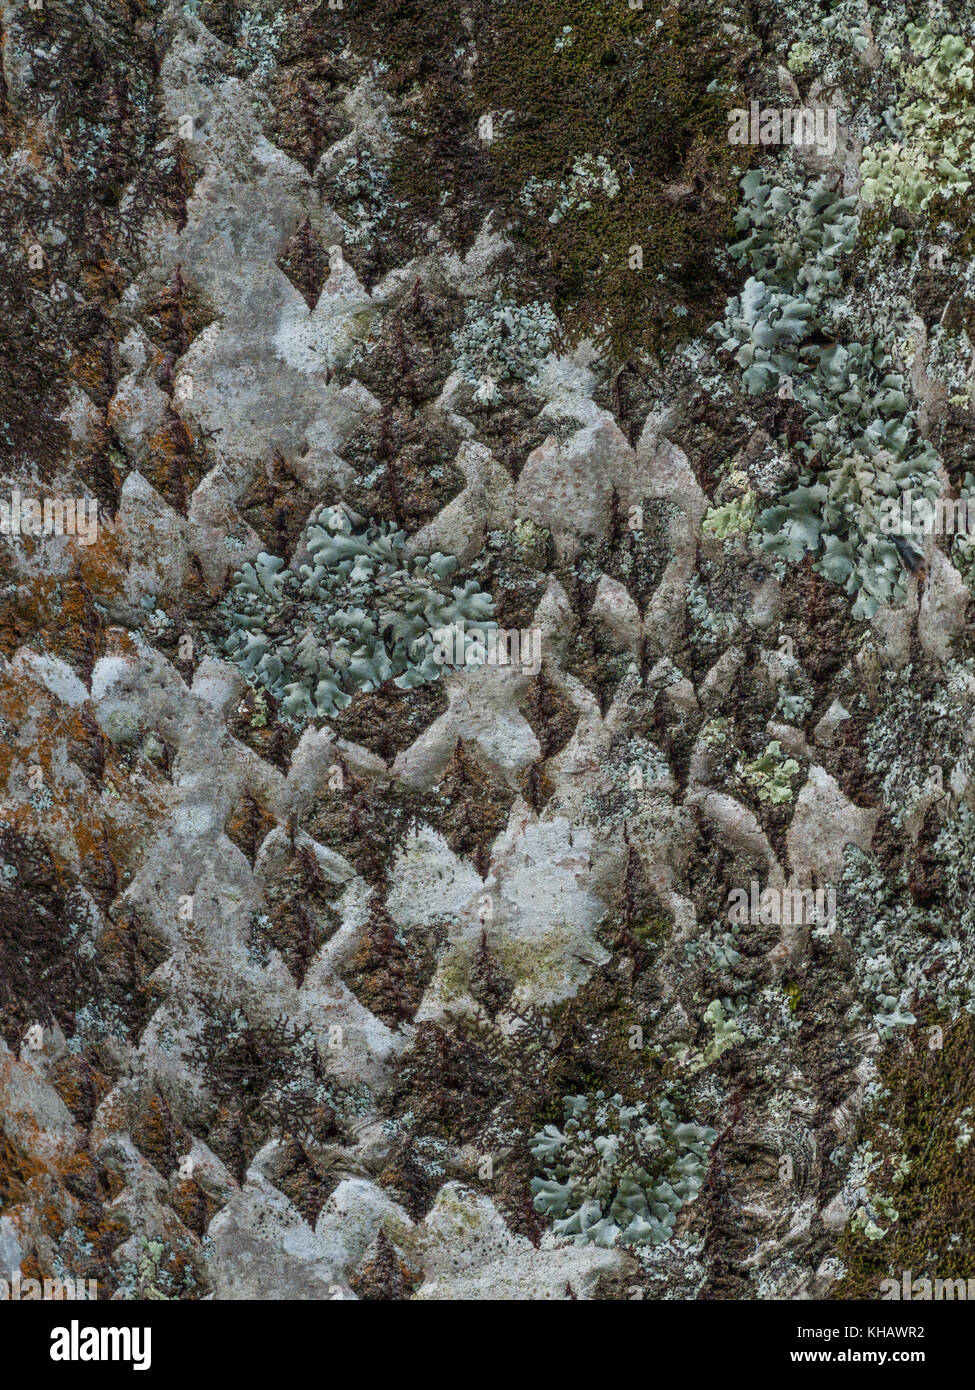 Winter close-up White Poplar / Populus alba or possibly Grey Poplar / P. canescens, bark with diamond-shaped pores. Bark texture, bark close up. Stock Photo